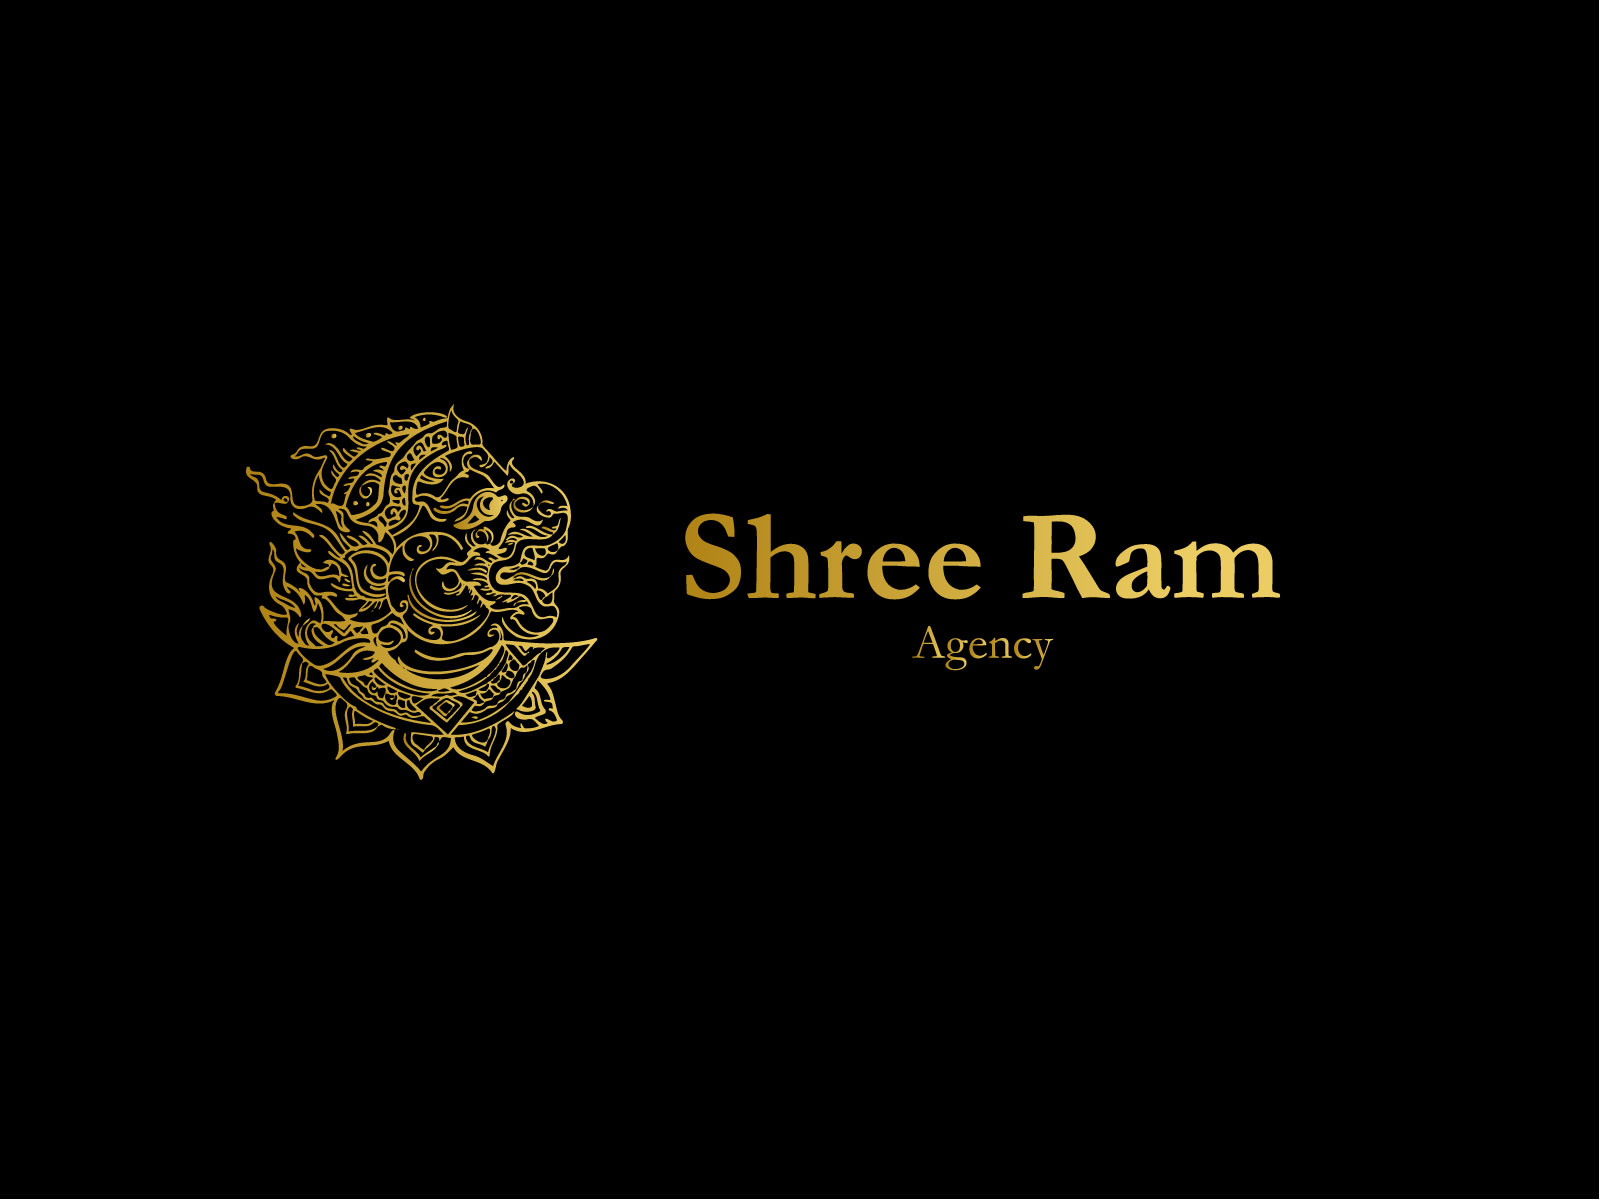 Ram Logos - 50+ Best Ram Logo Ideas. Free Ram Logo Maker. | 99designs